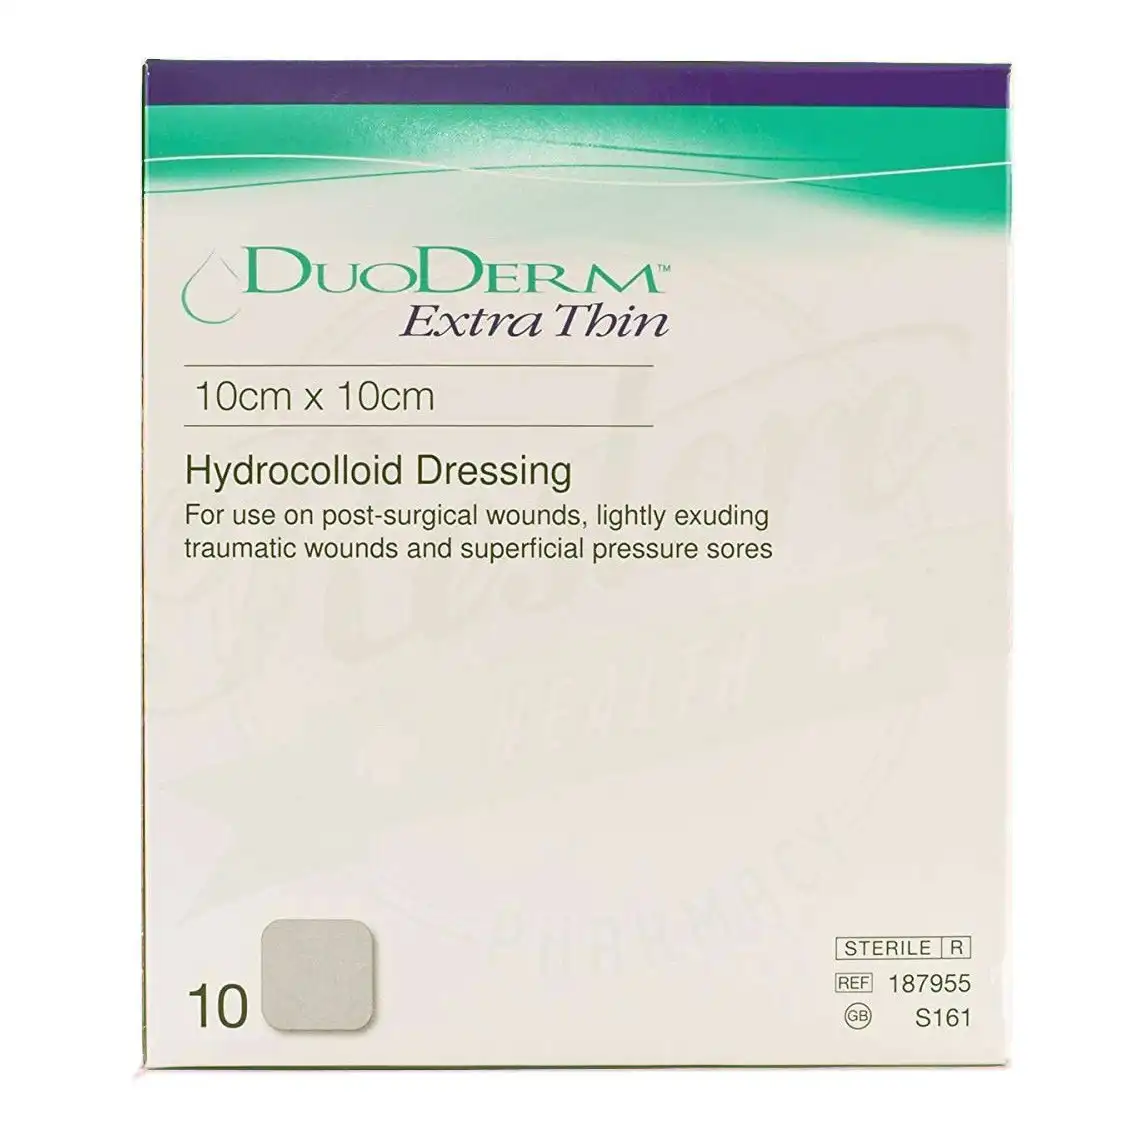 DuoDerm Extra Thin 10cm x 10cm Hydrocolloid - Single Dressing (1 Pack)